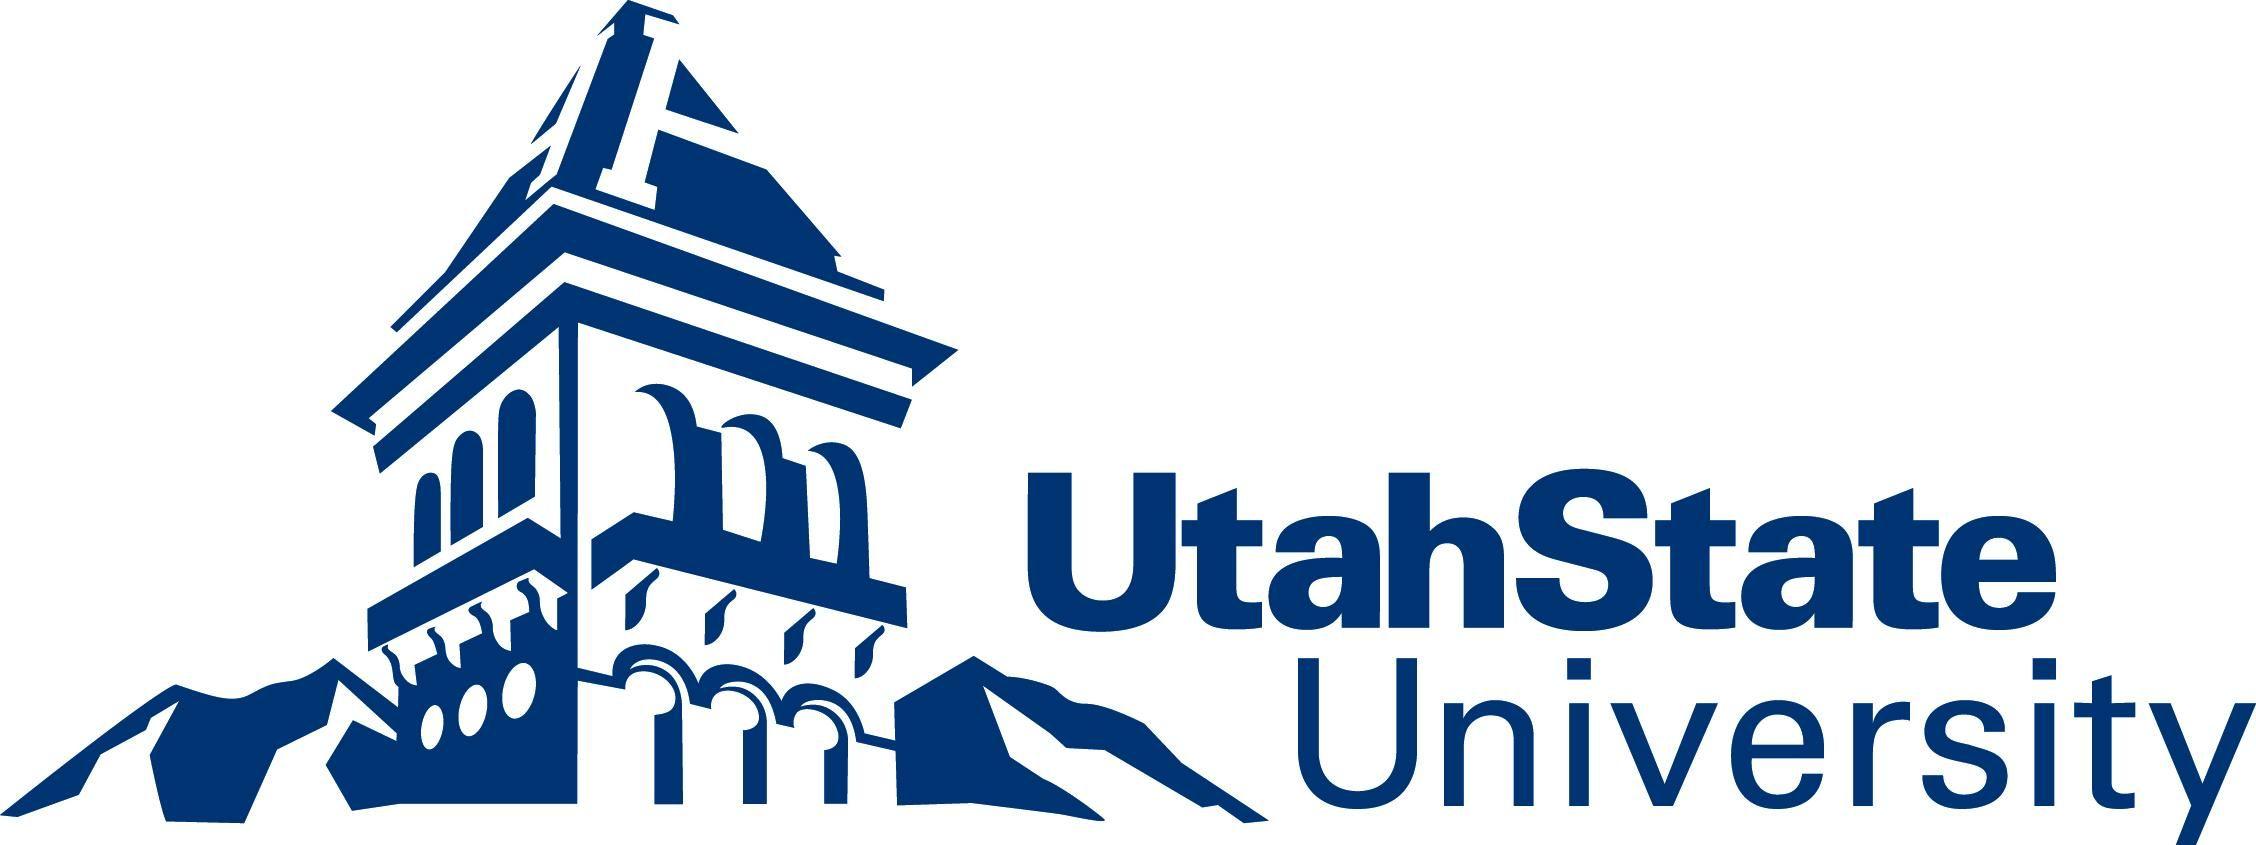 Utah Valley University Logo - Bear River Watershed